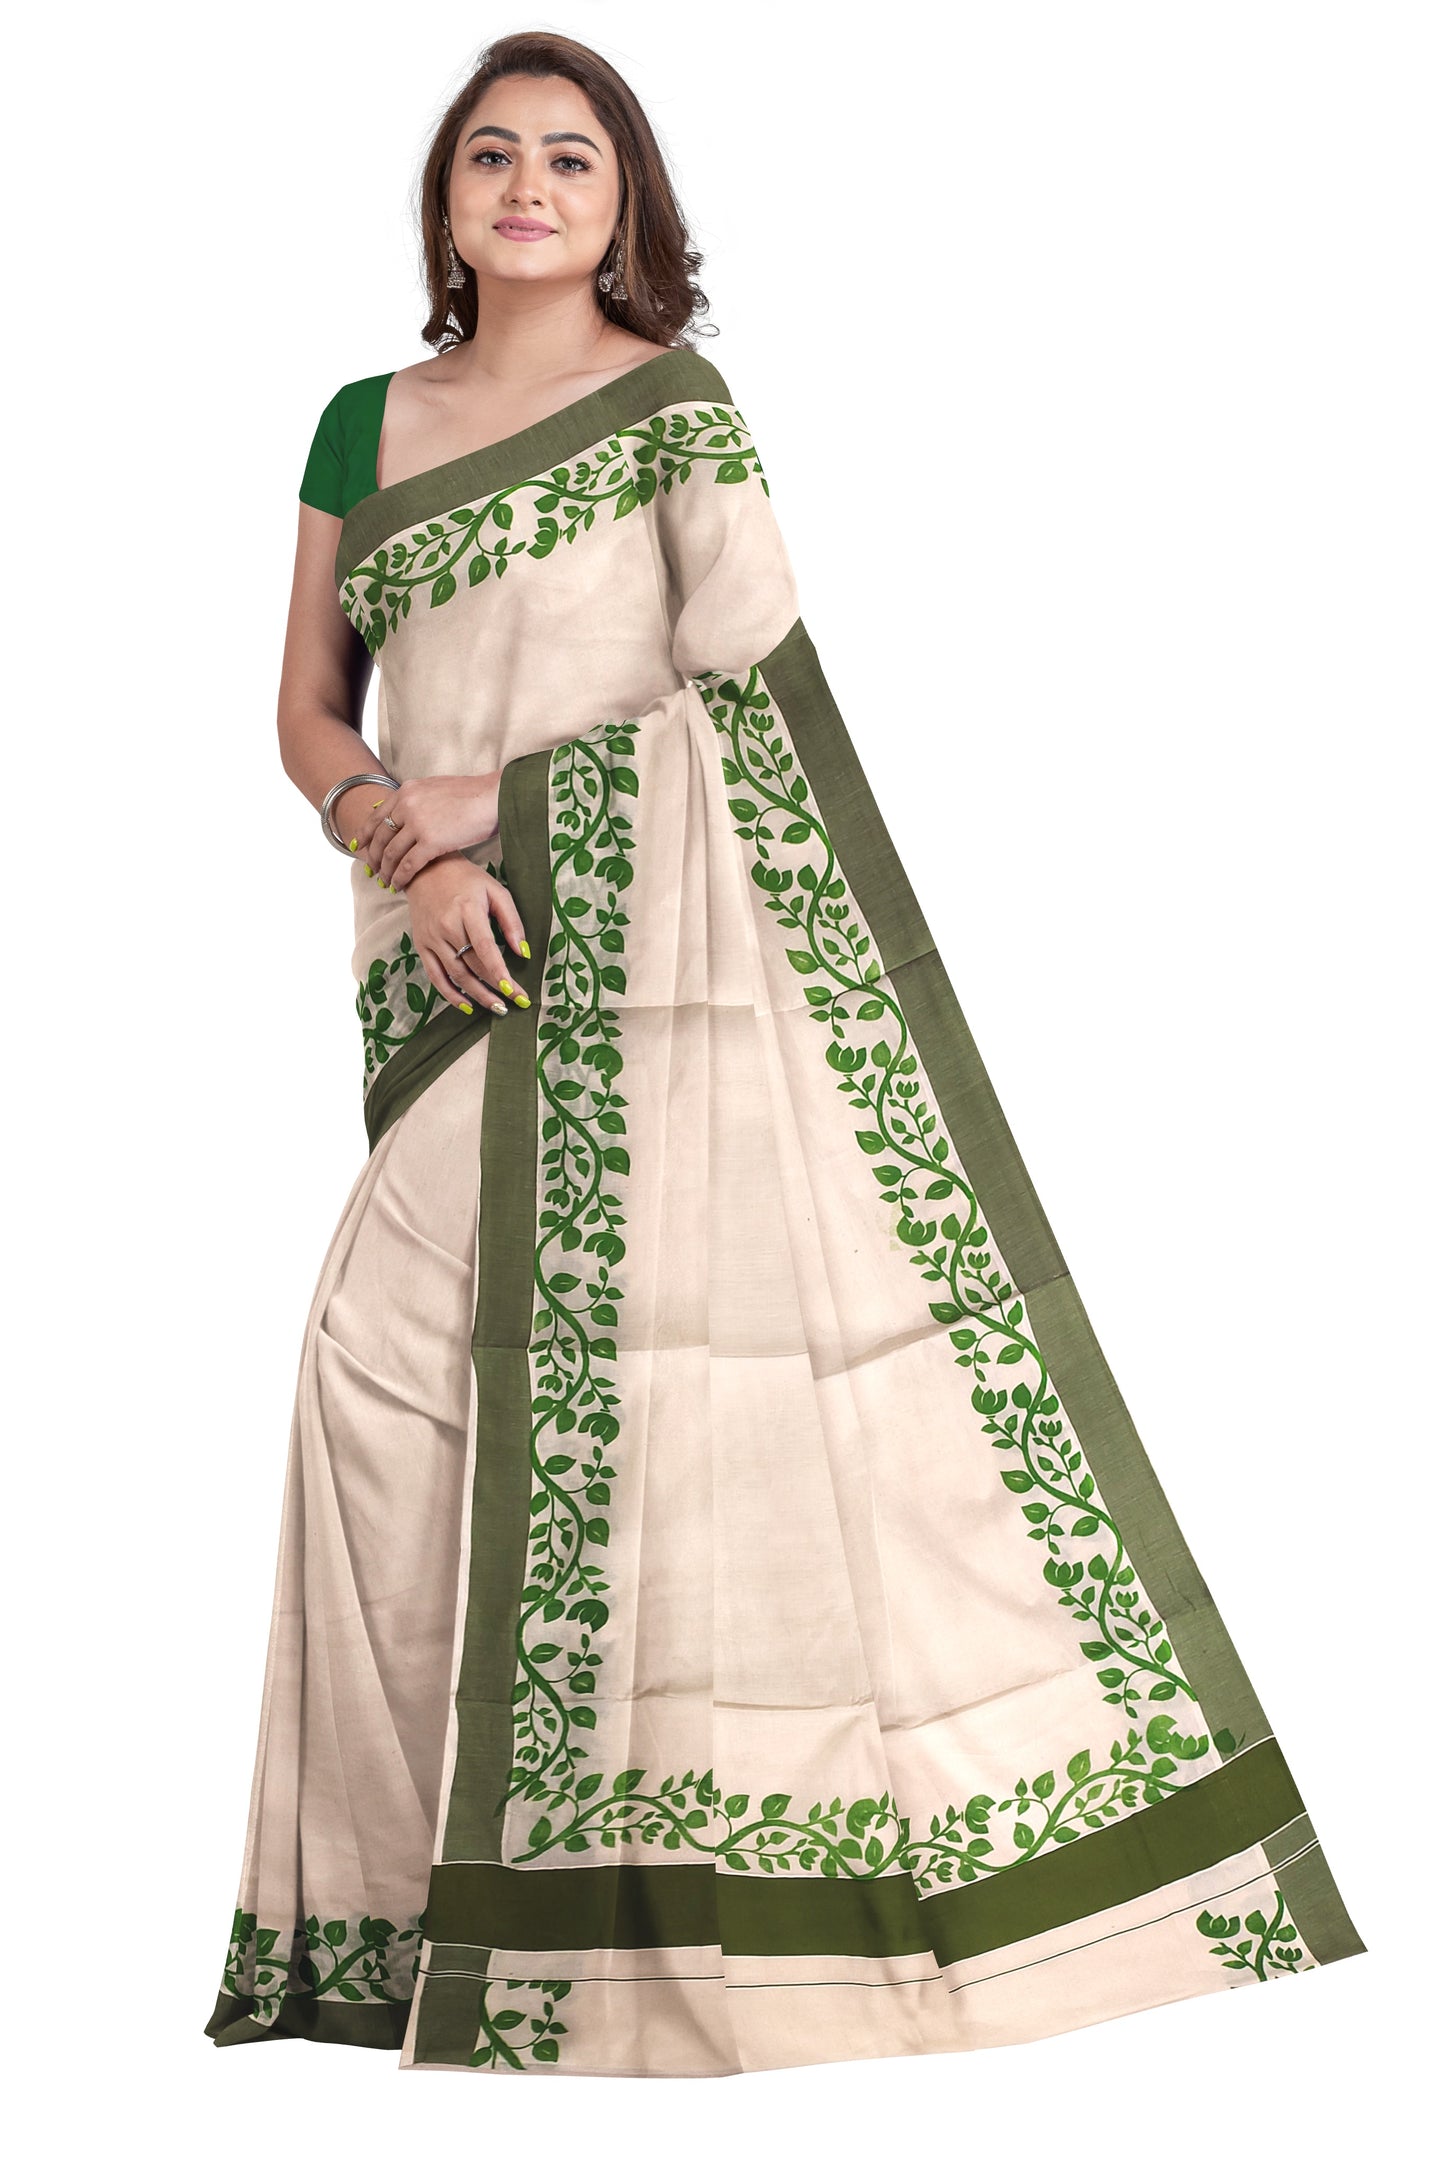 Southloom Original Design Onam Kerala Saree with Olive Green Floral Vines Block Print